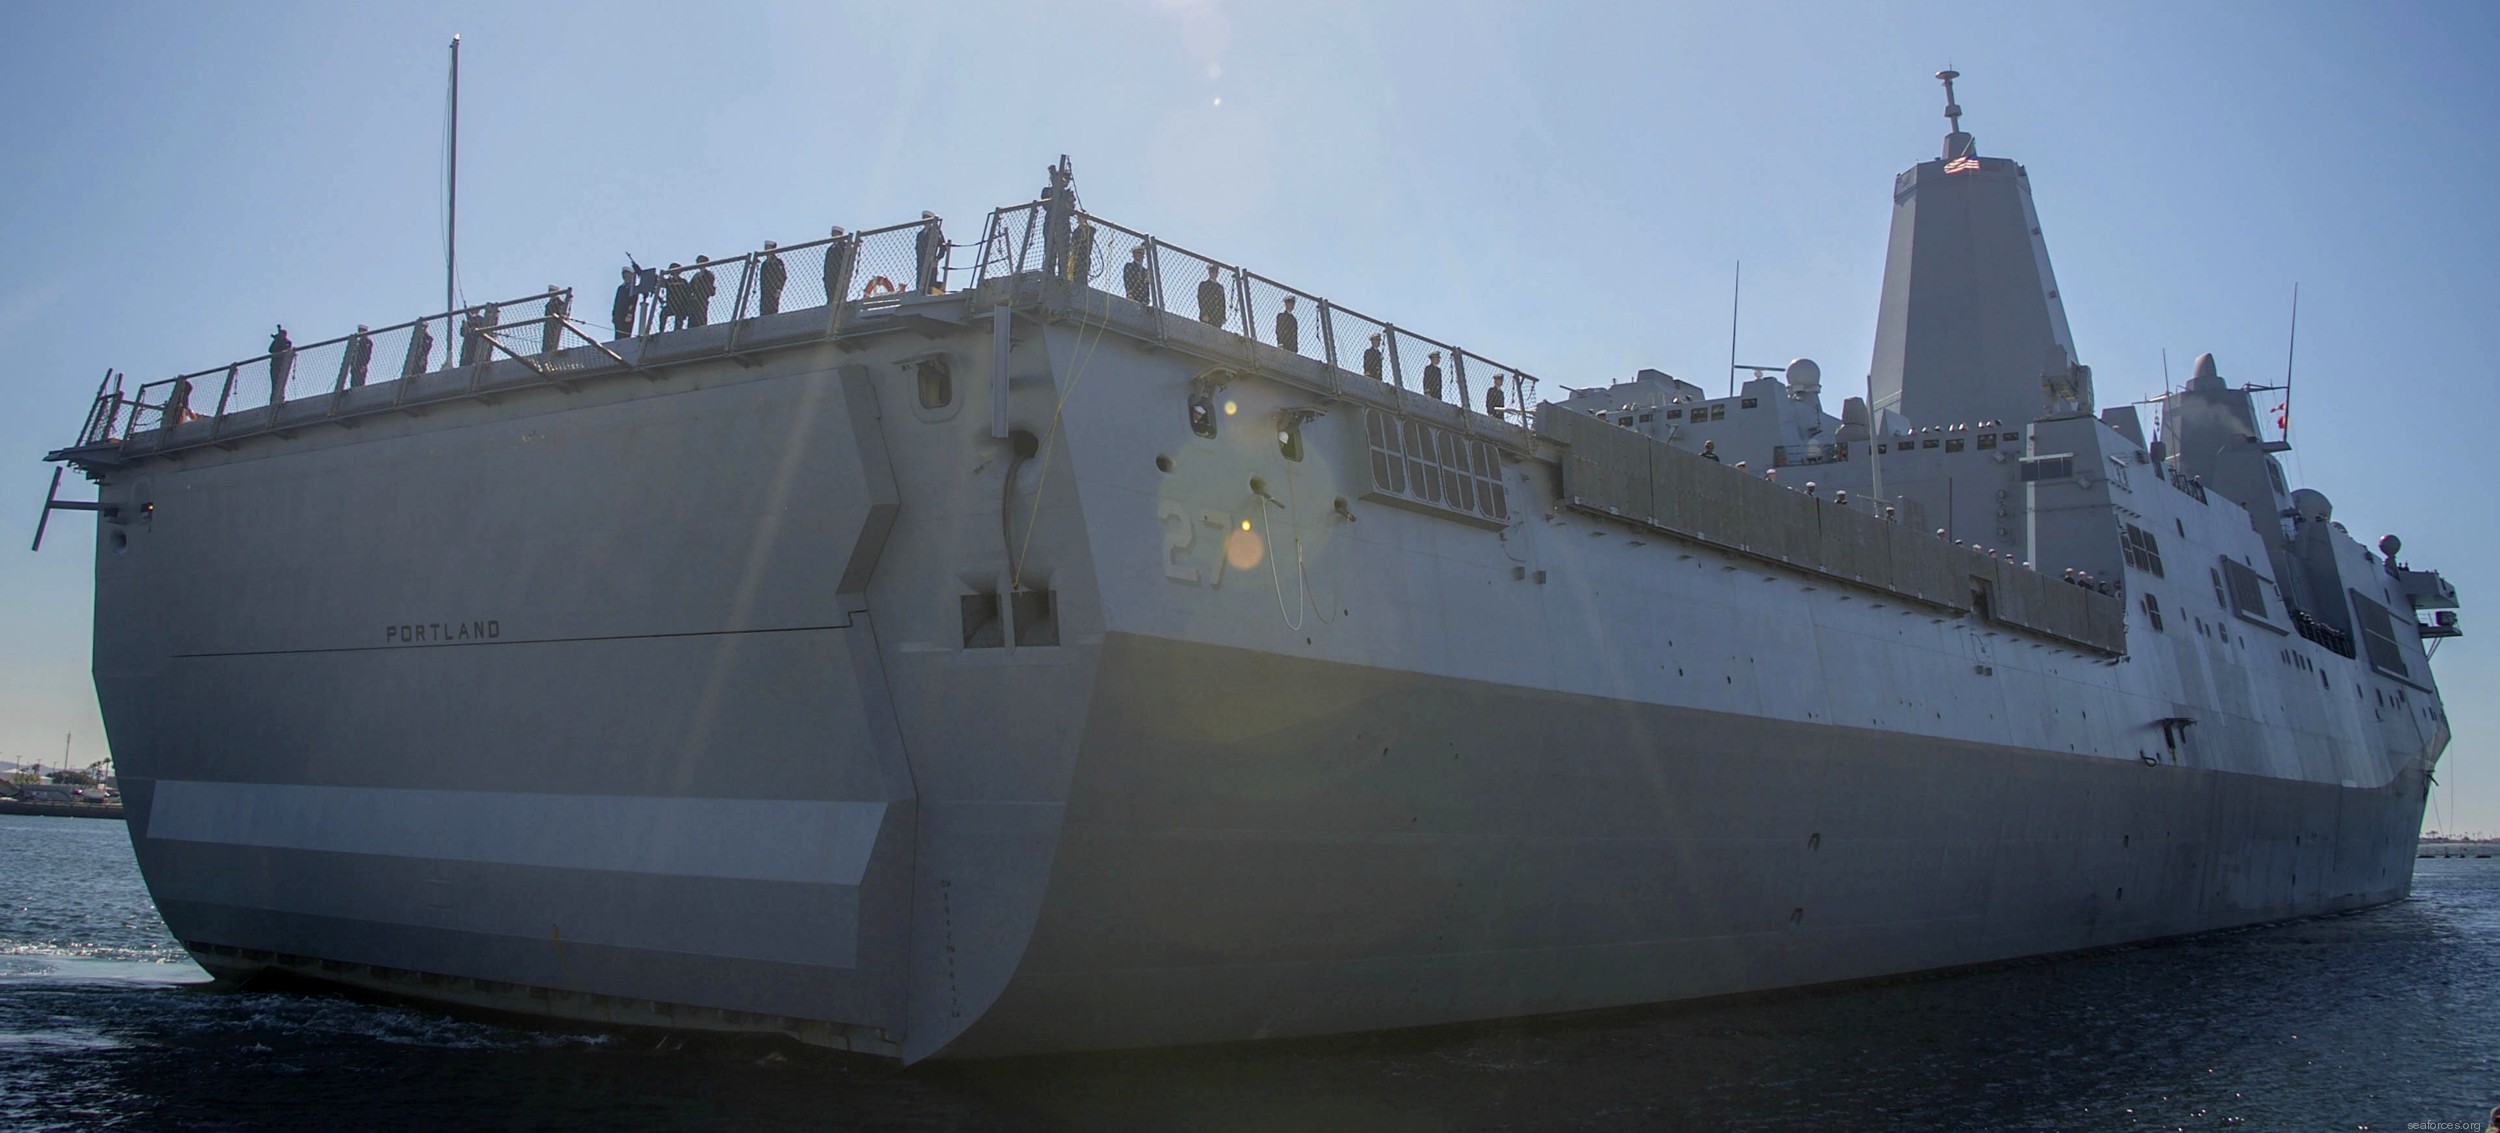 lpd-27 uss portland san antonio class amphibious transport dock ship navy 08 san diego